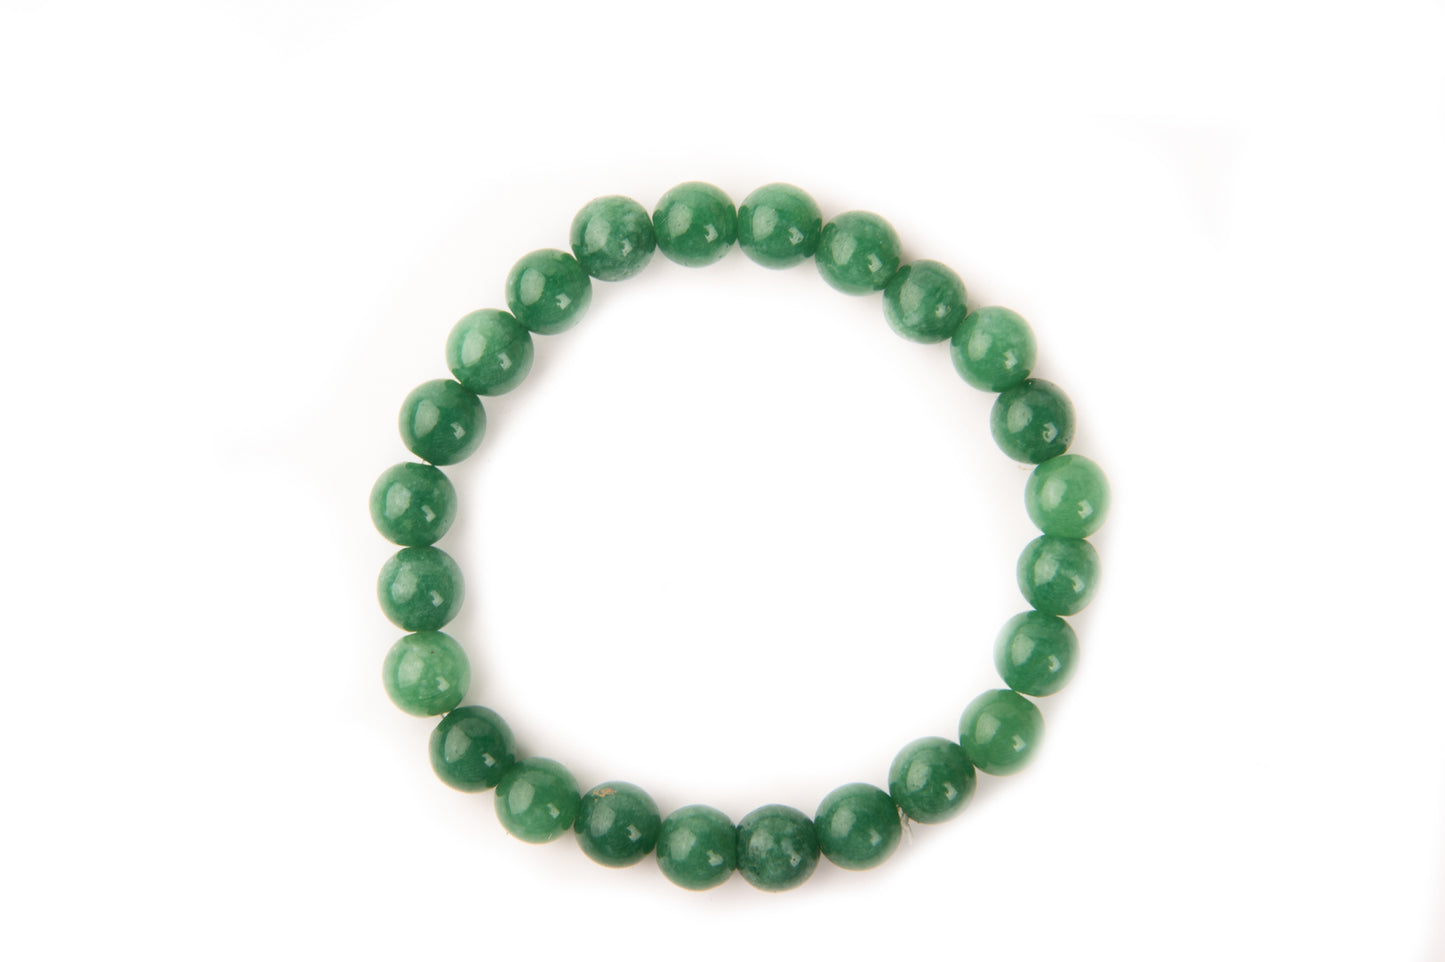 Green Jade 8mm Bead Bracelet